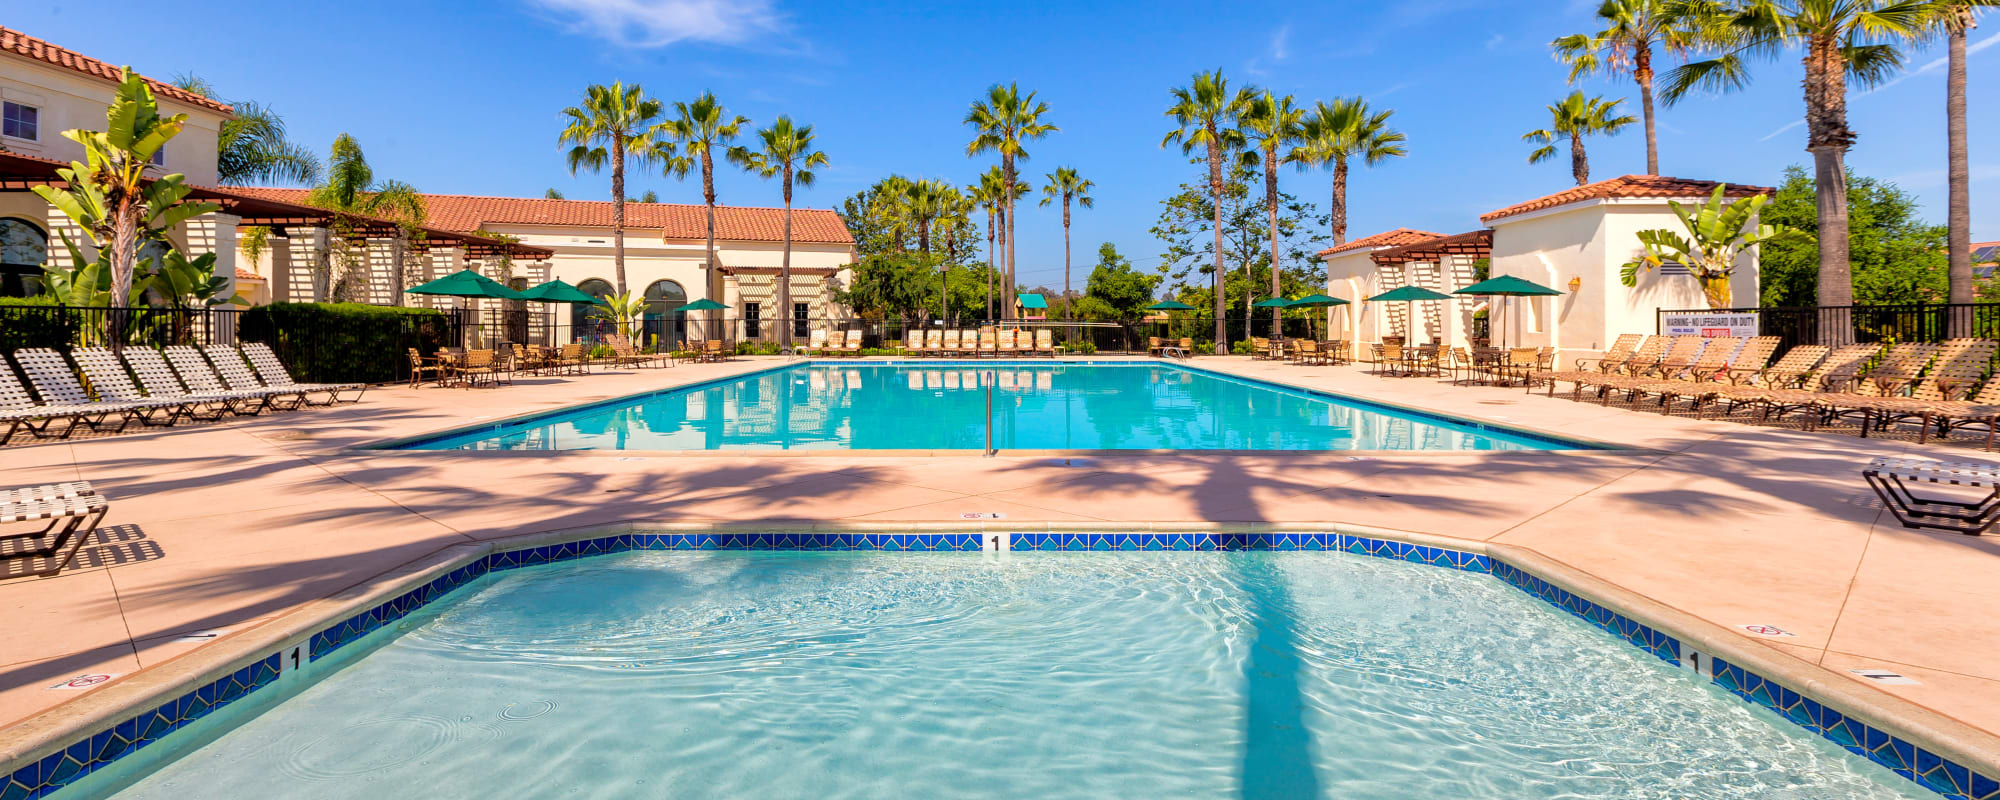 A swimming pool at The Village at Serra Mesa in San Diego, California